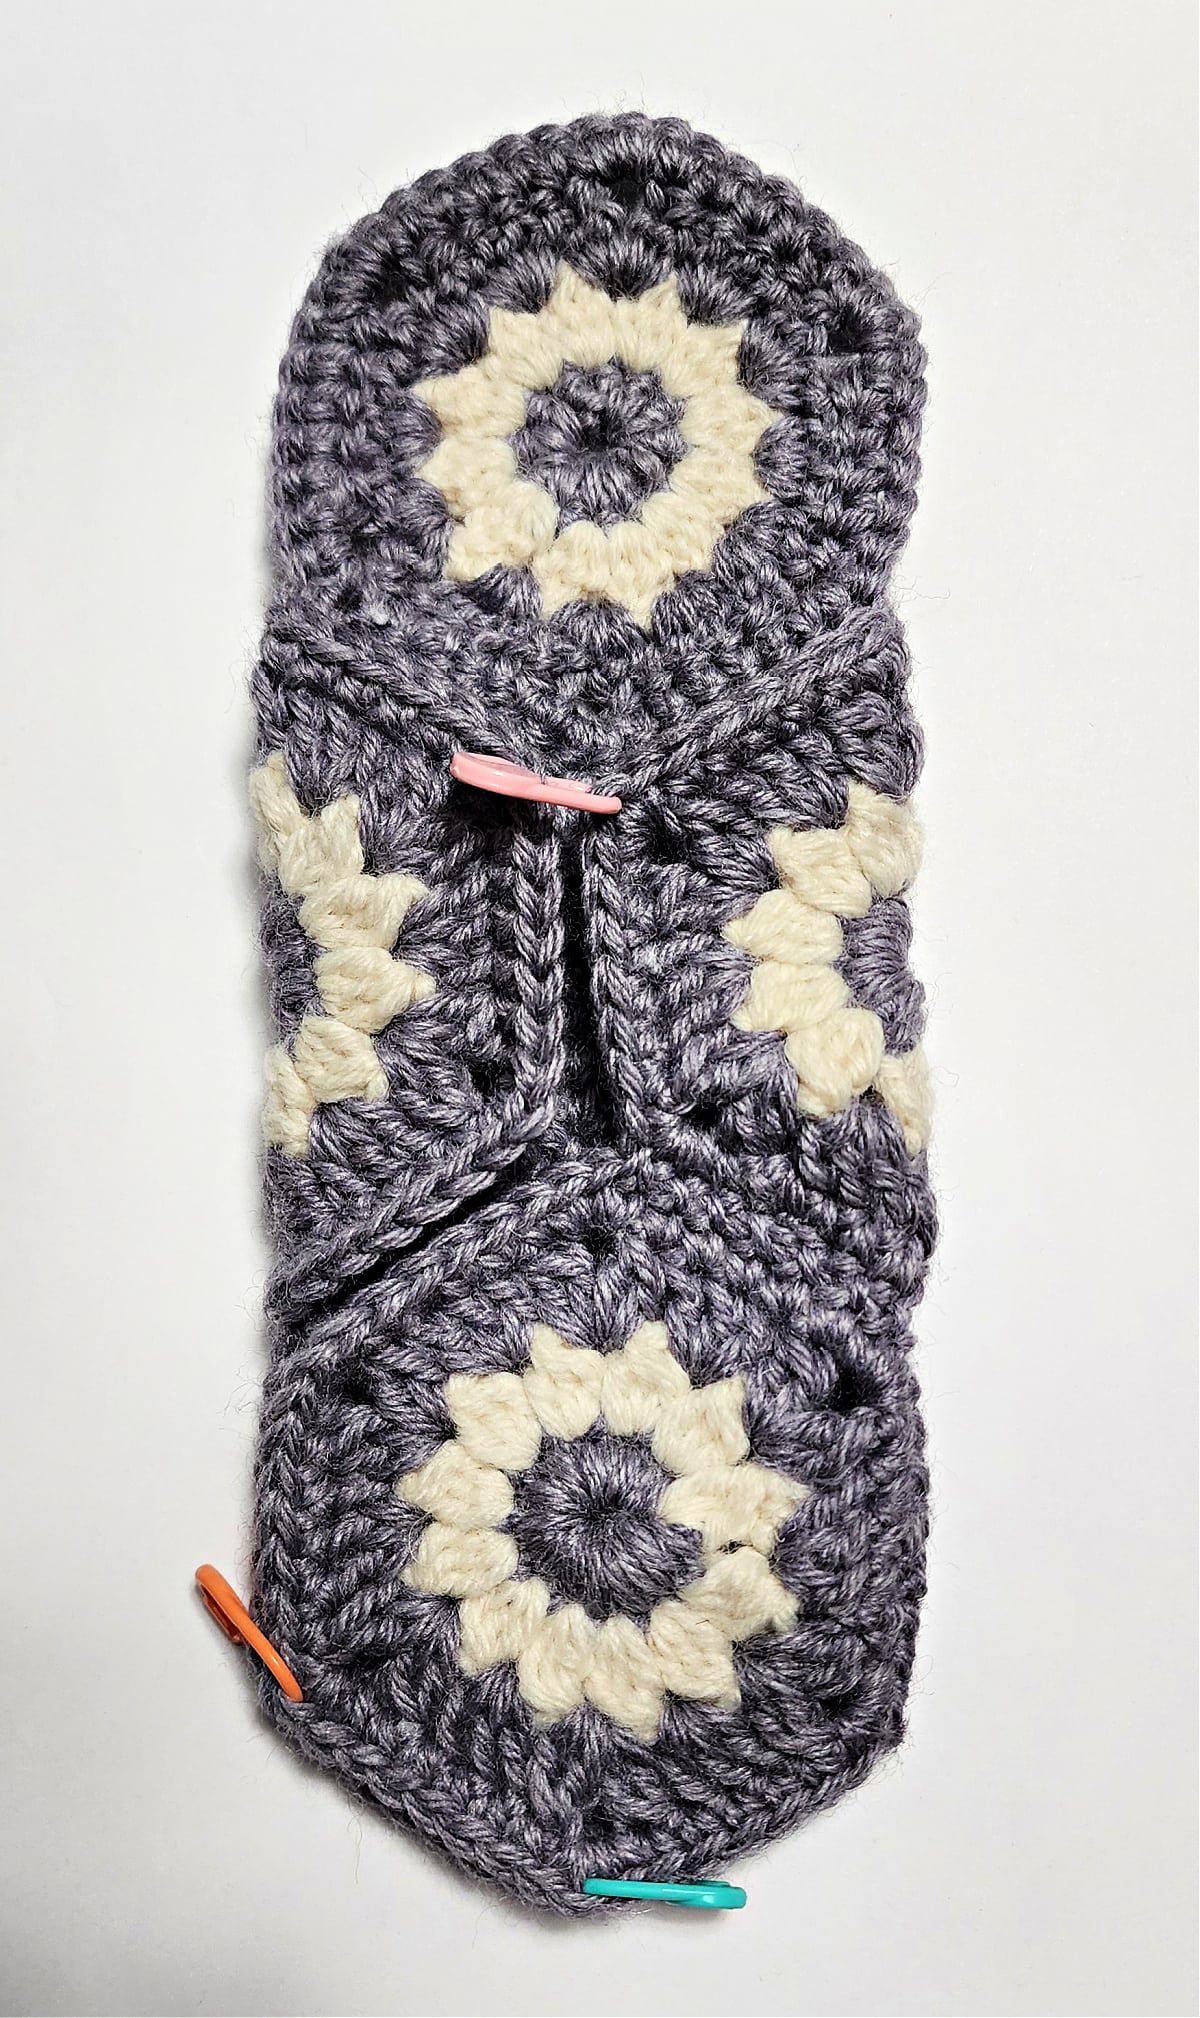 Crochet motifs folded to create a hexagon pouch.